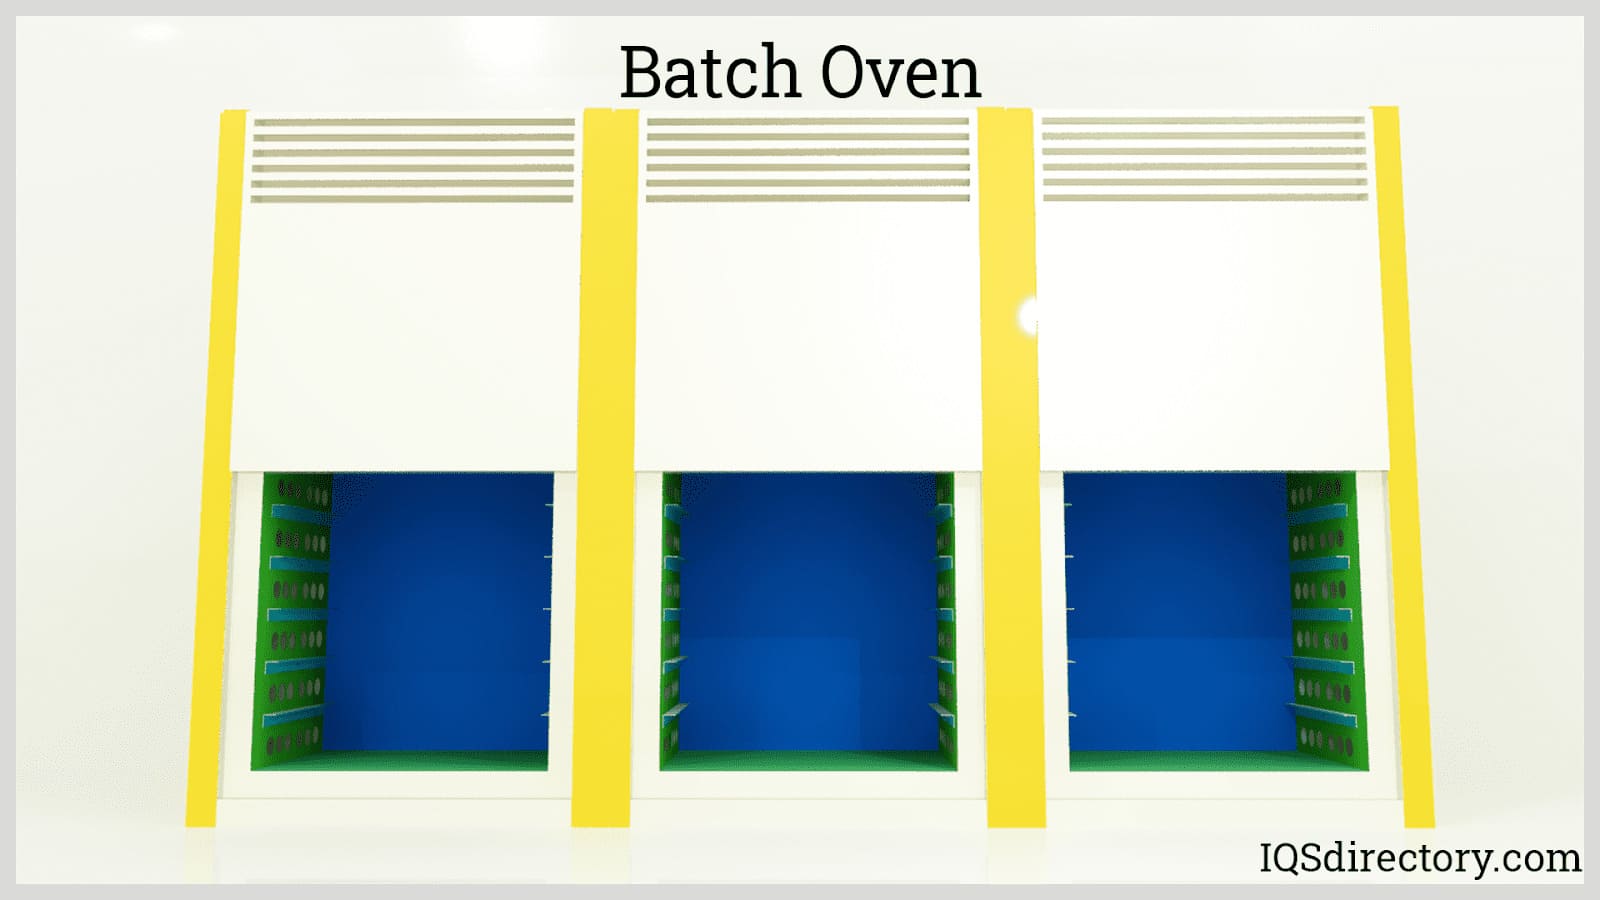 Batch Oven